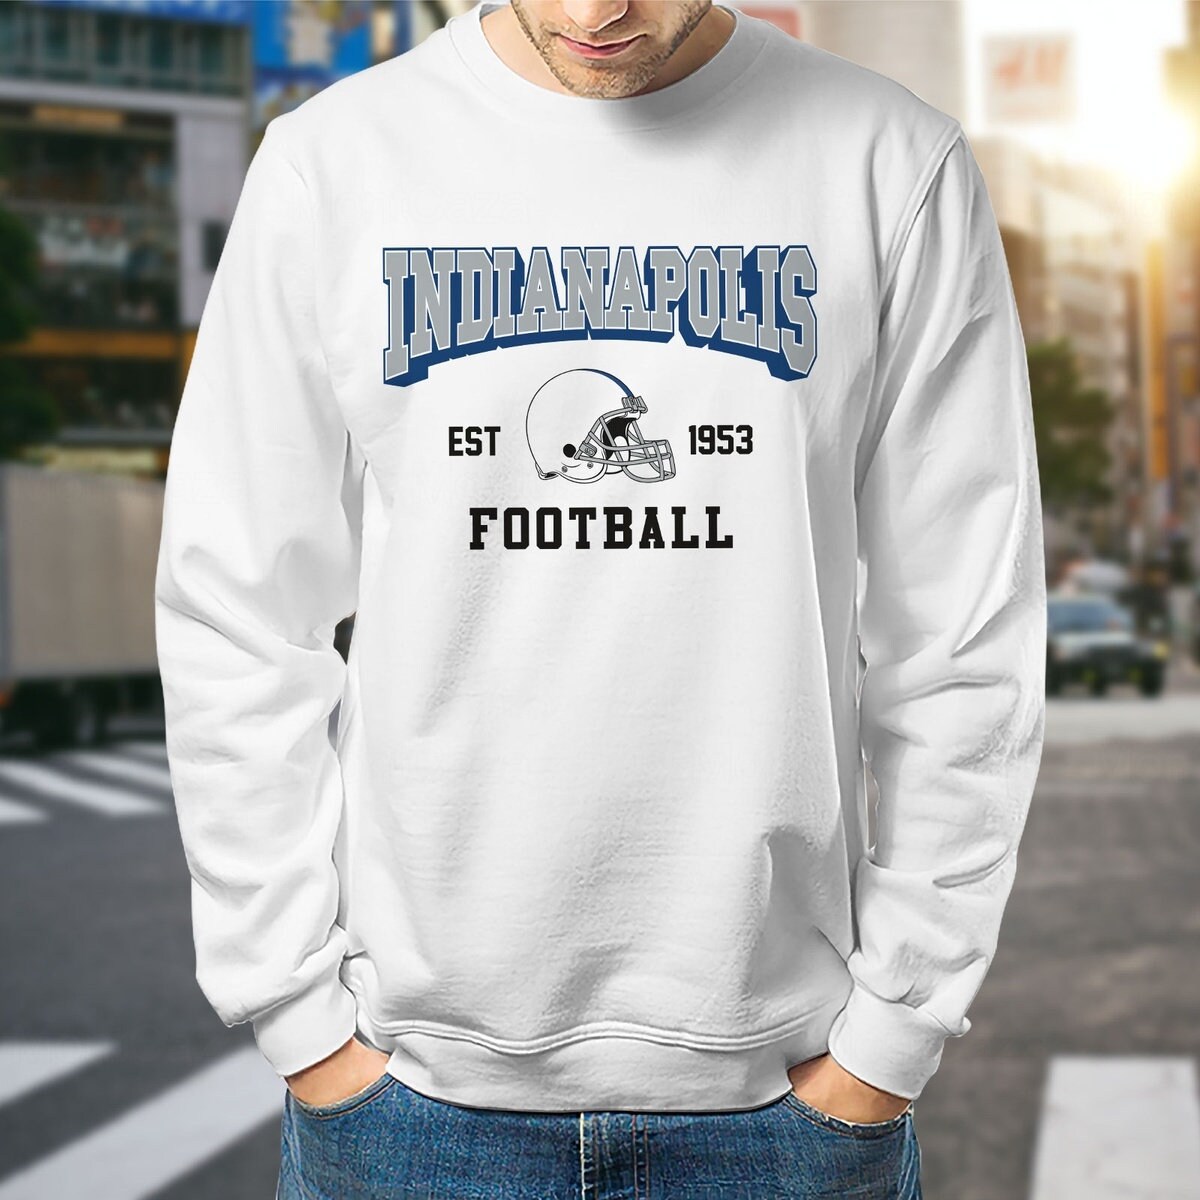 Indianapolis Hoodie, Indianapolis T-Shirts, Indianapolis Football